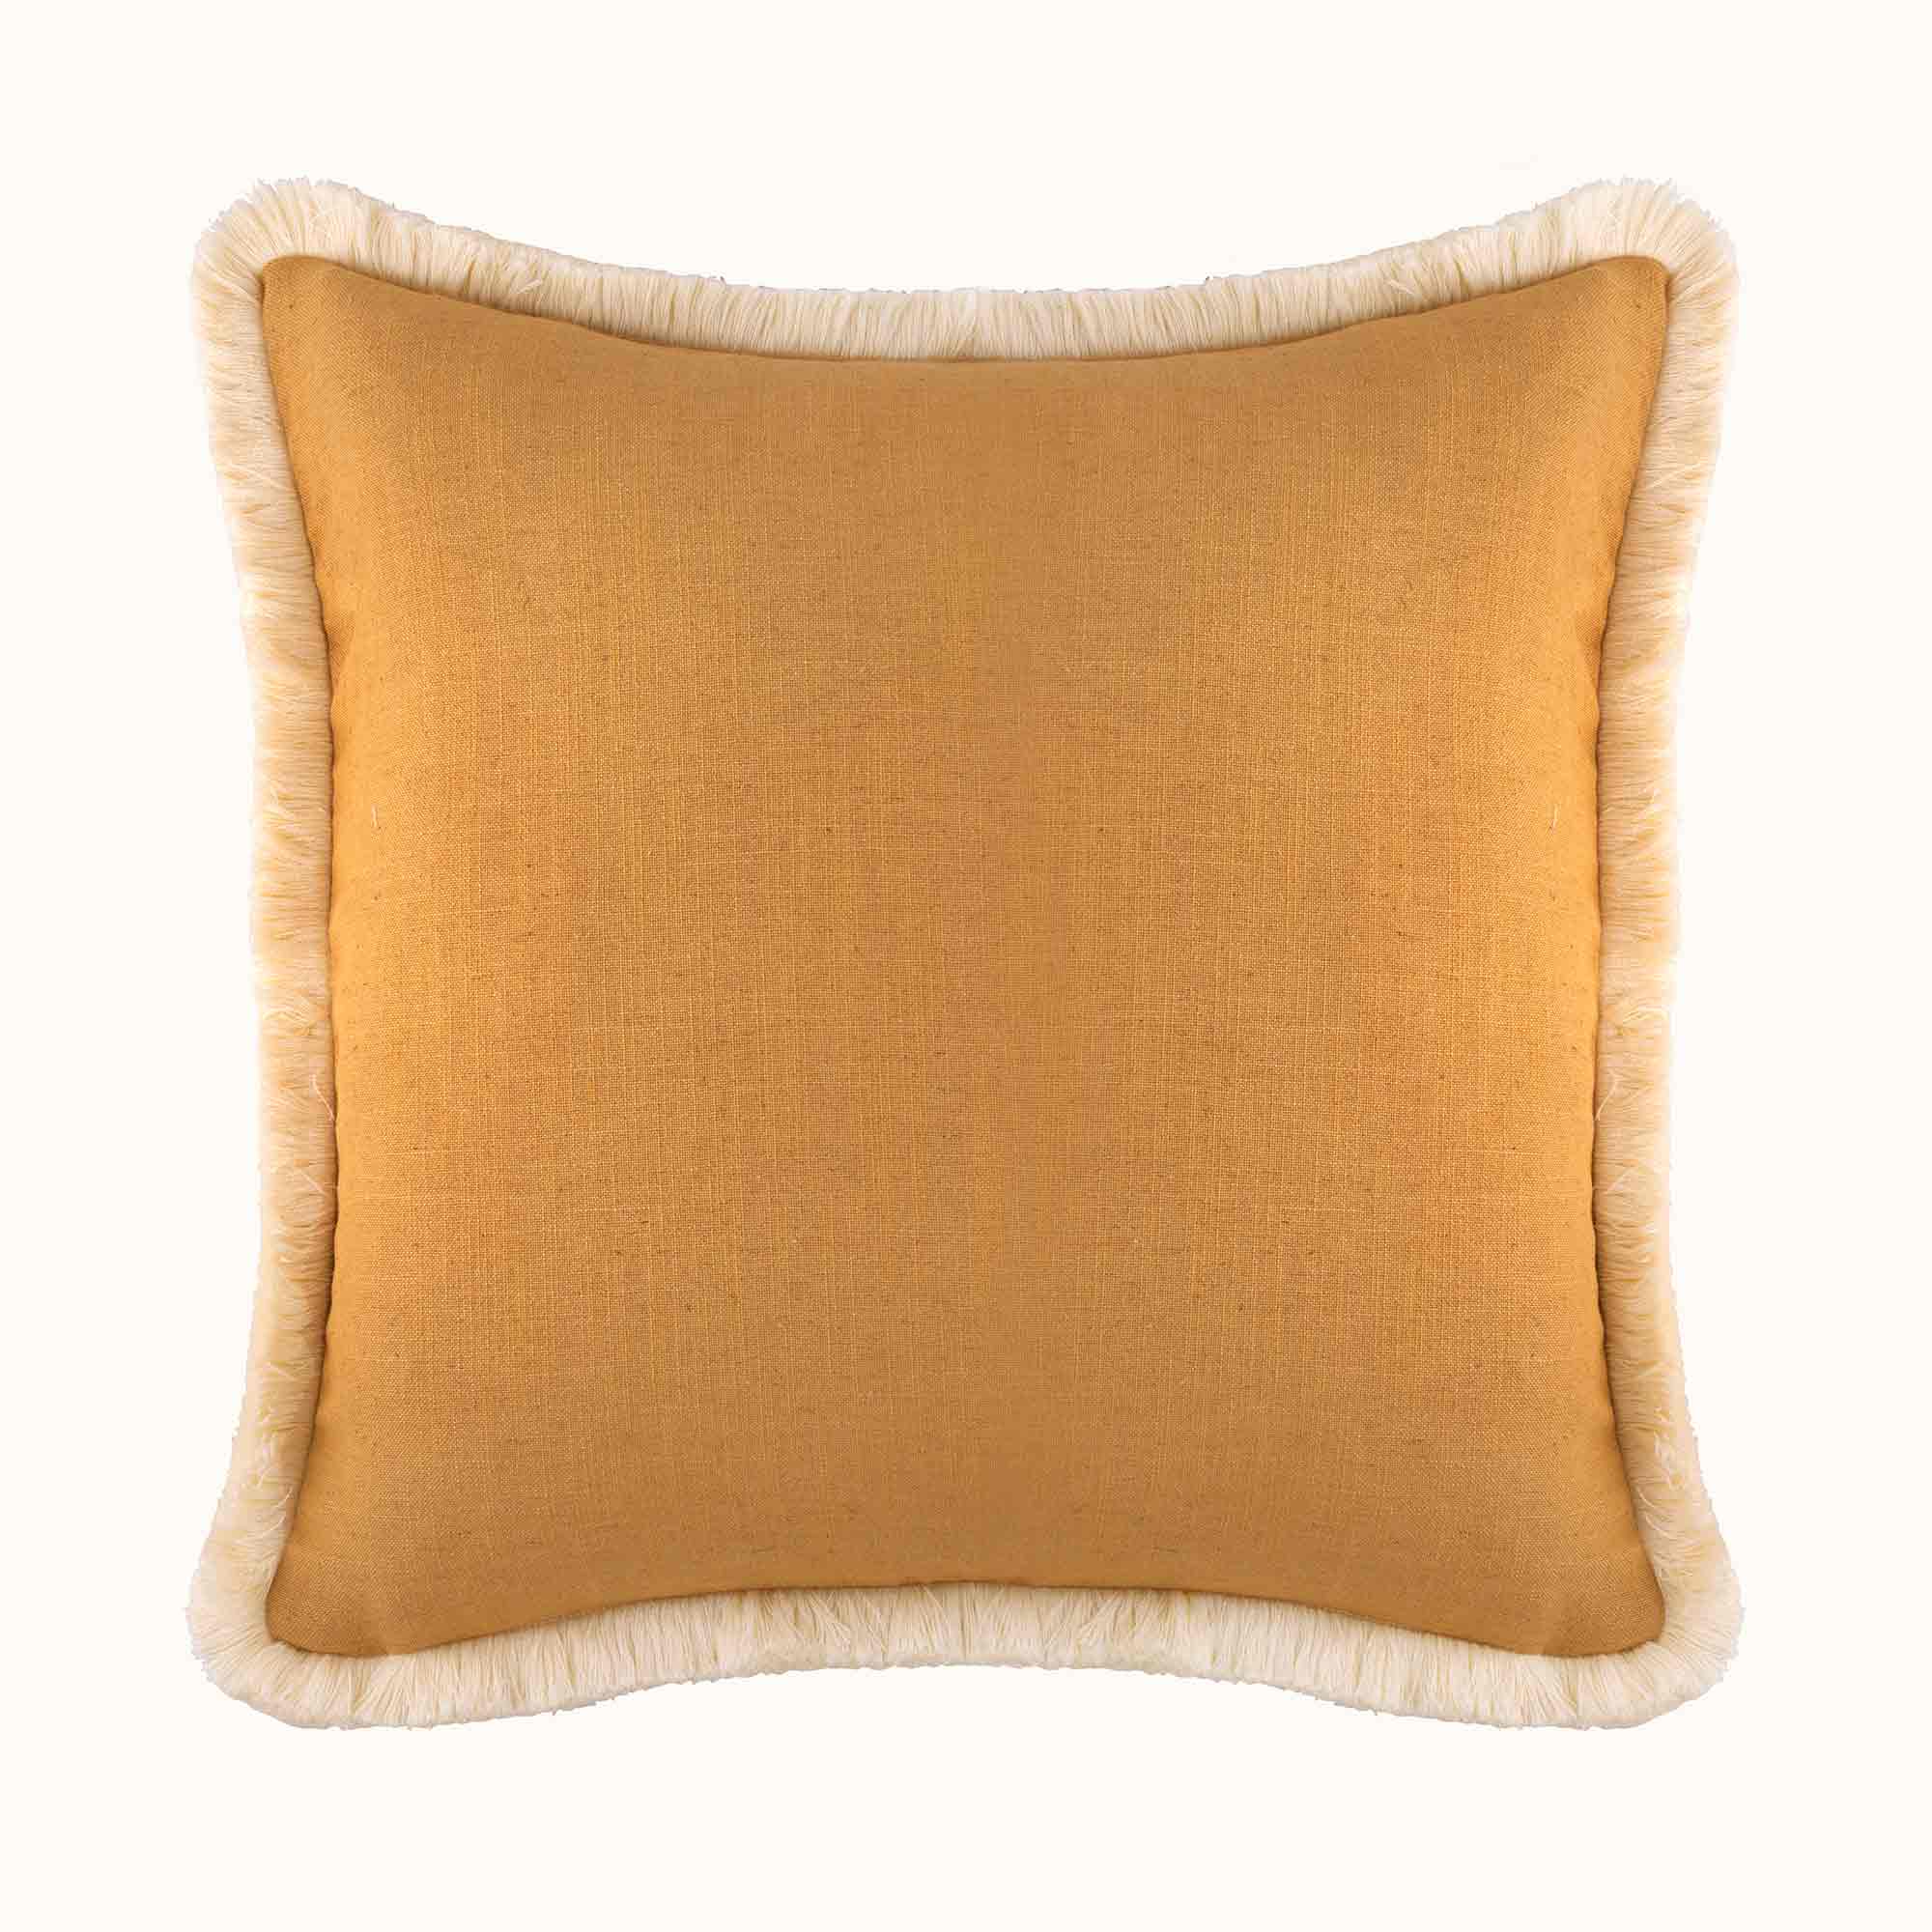 55cm x 55cm Square Cushion with Fringe